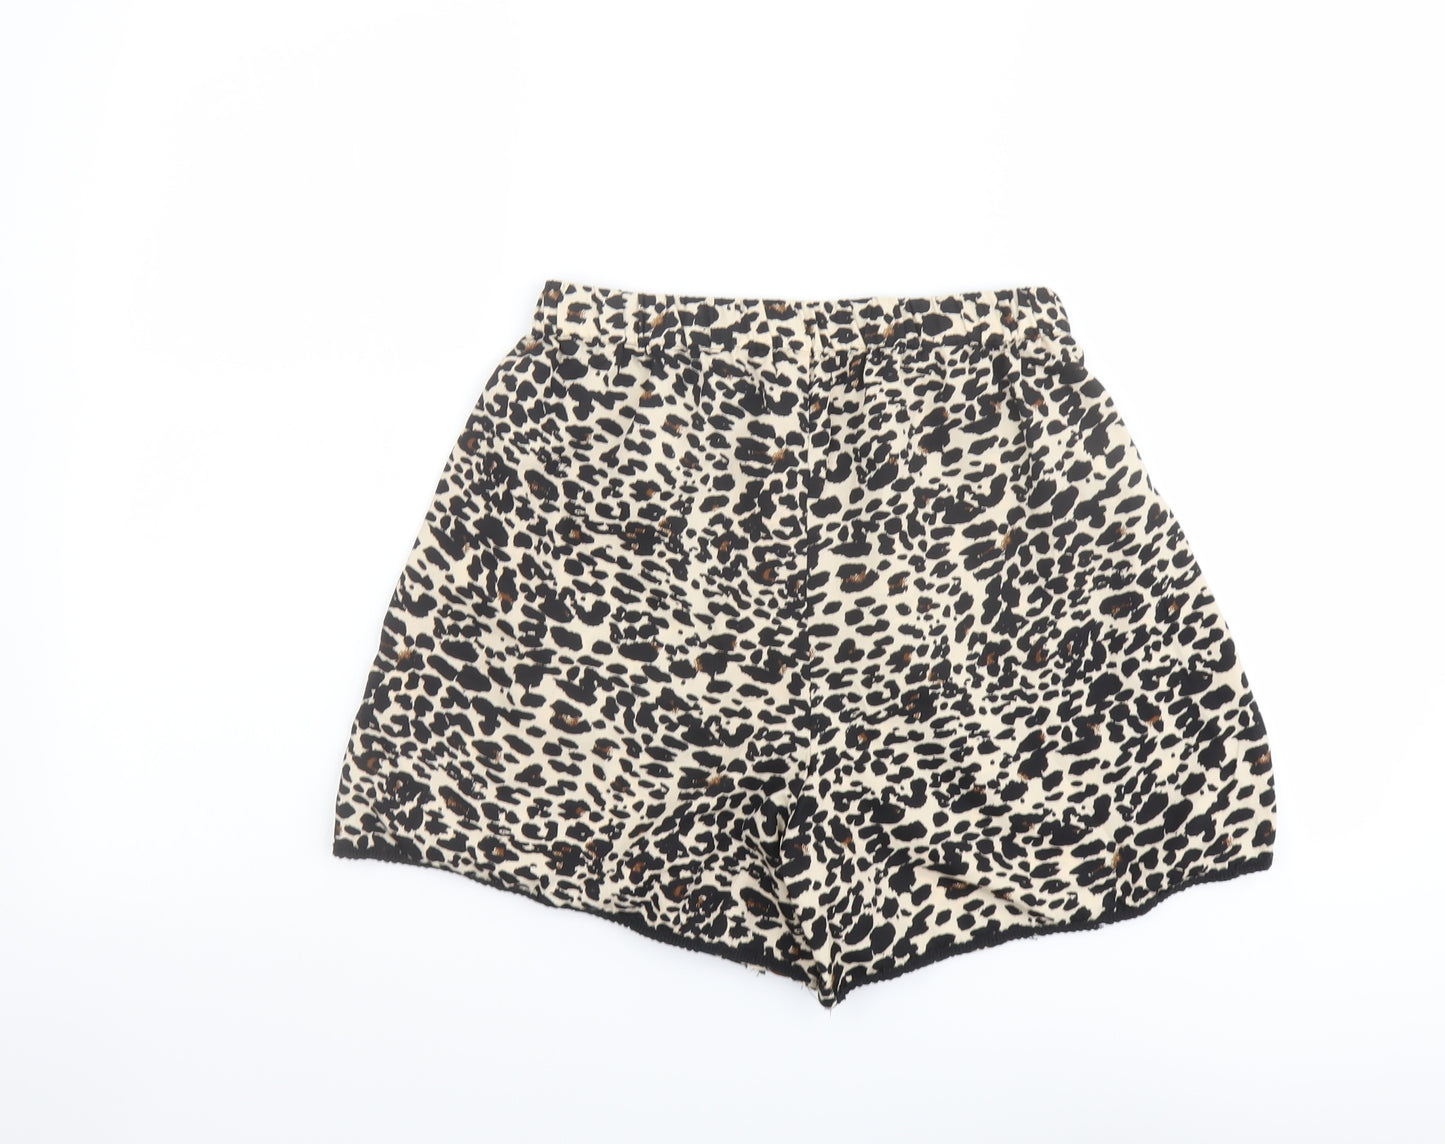 Boohoo Womens Beige Animal Print Polyester Bermuda Shorts Size 10 L4 in Regular Pull On